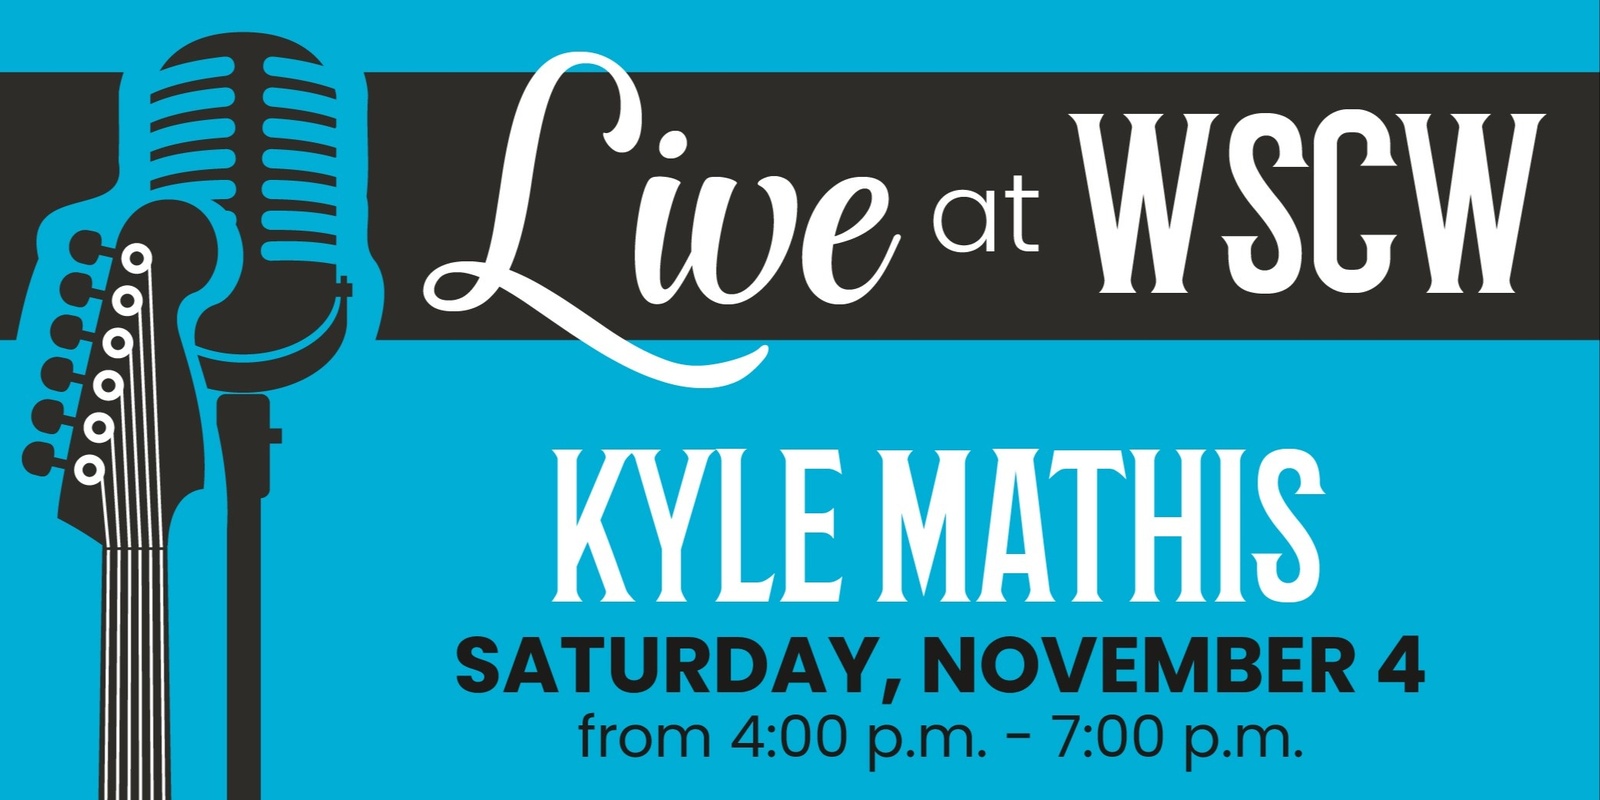 Banner image for Kyle Mathis Live at WSCW November 4